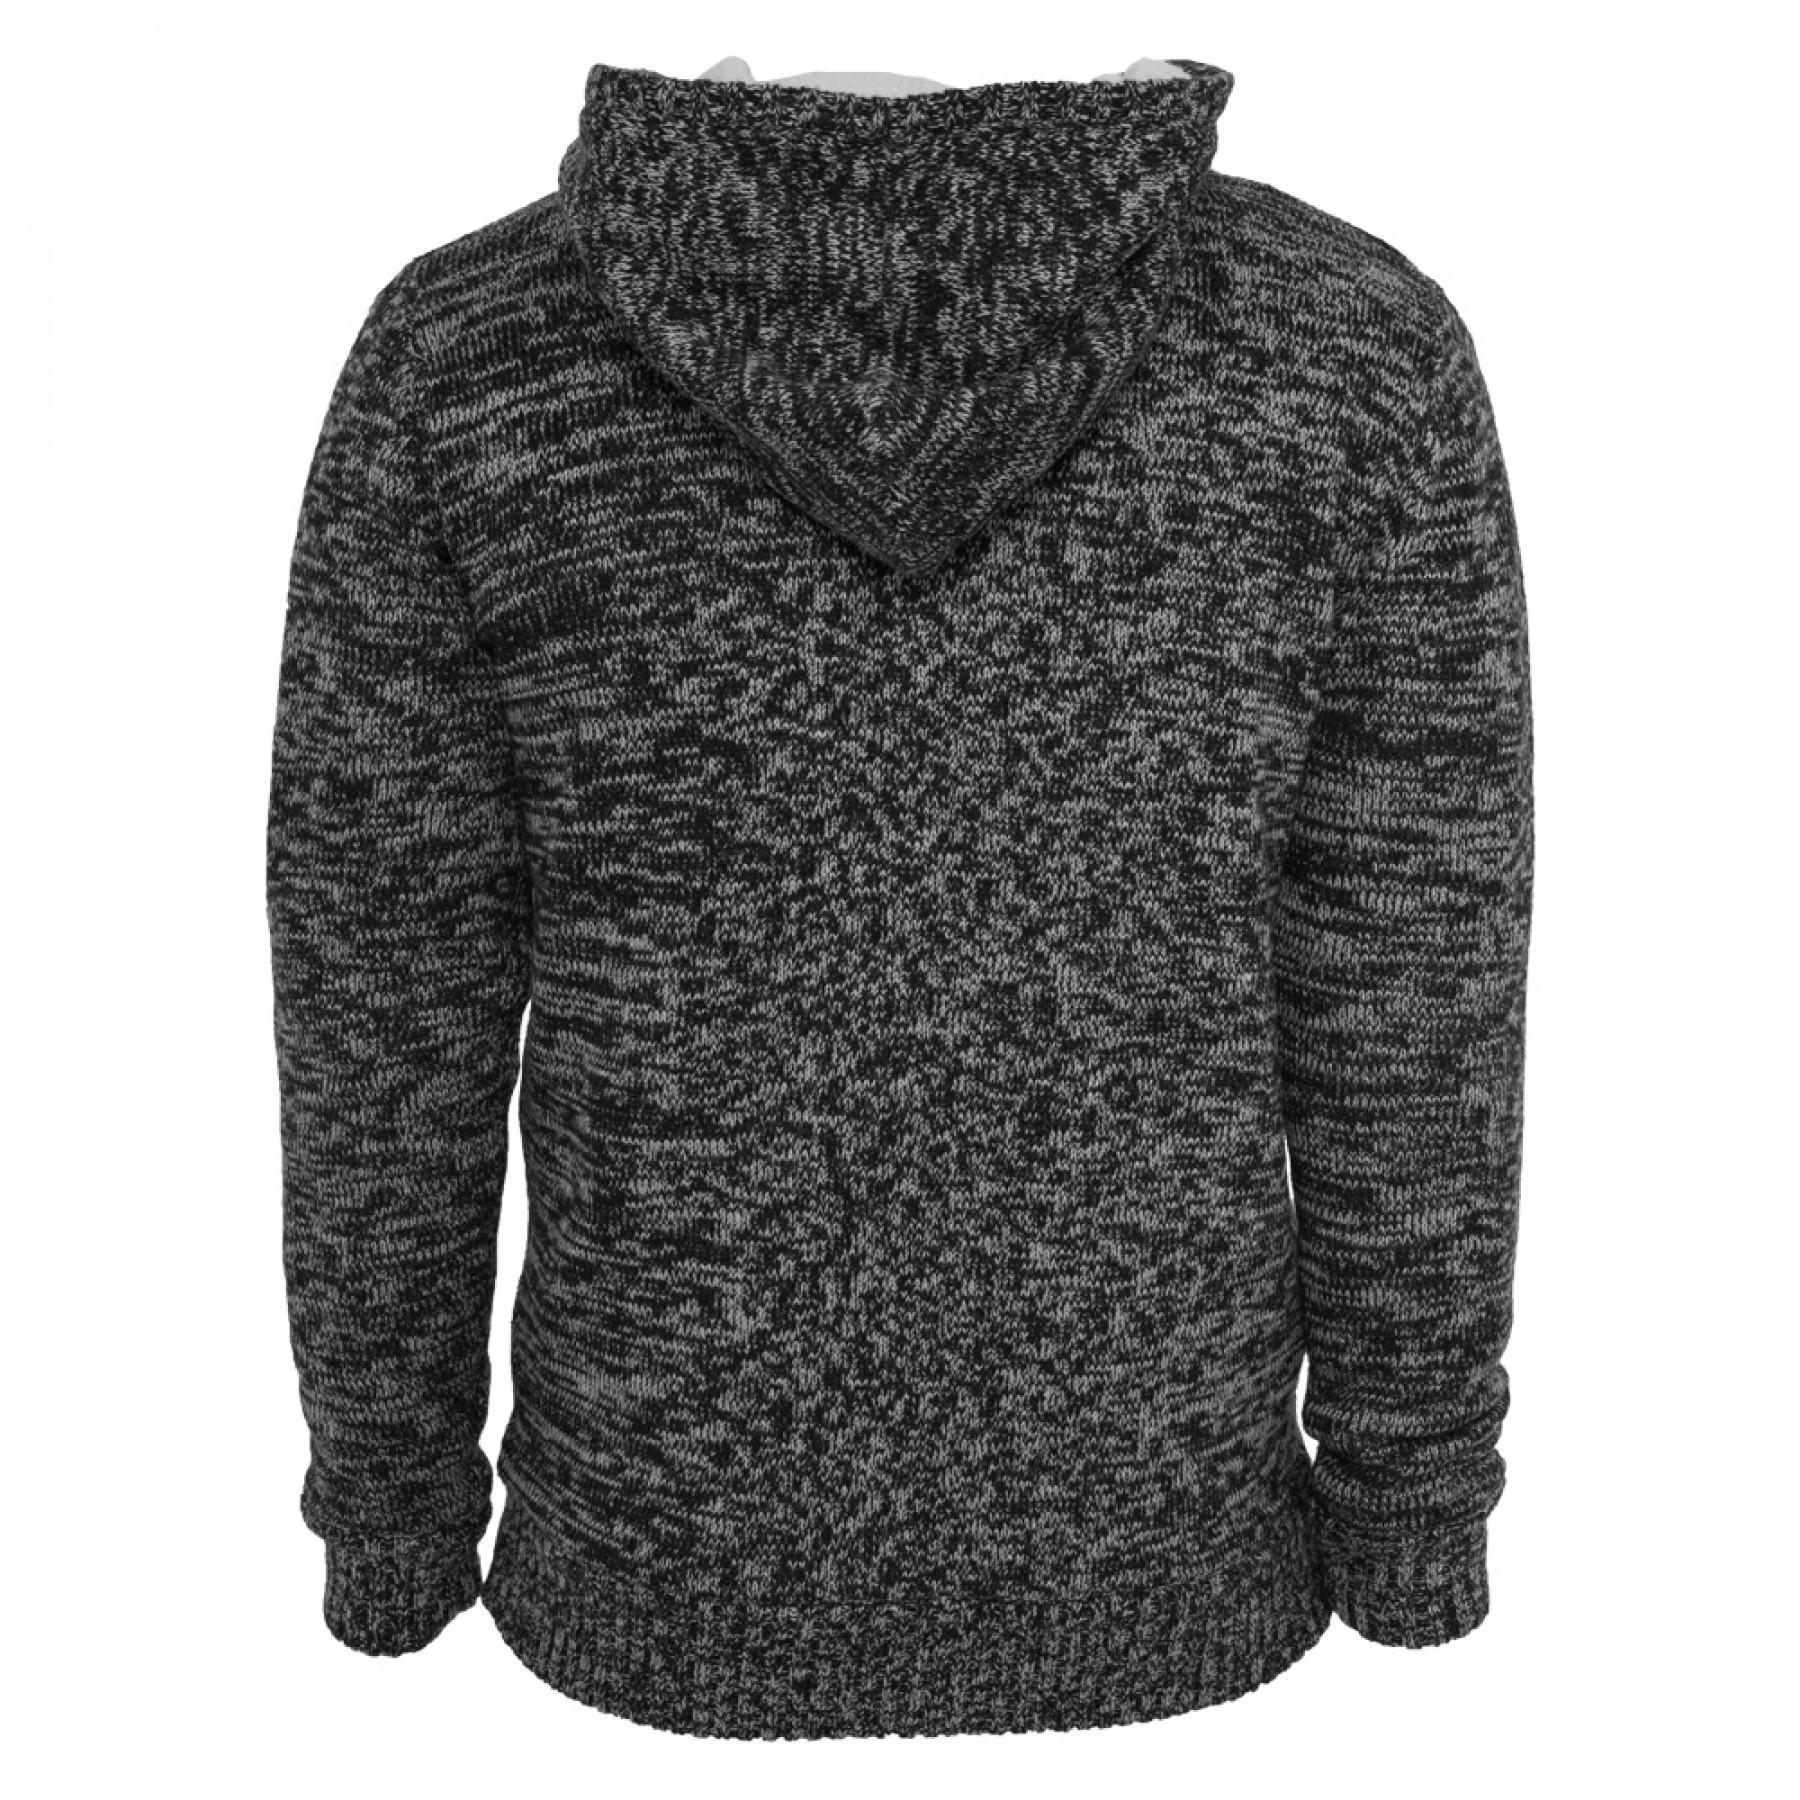 Sweatshirt Urban Classic winter knit zipper